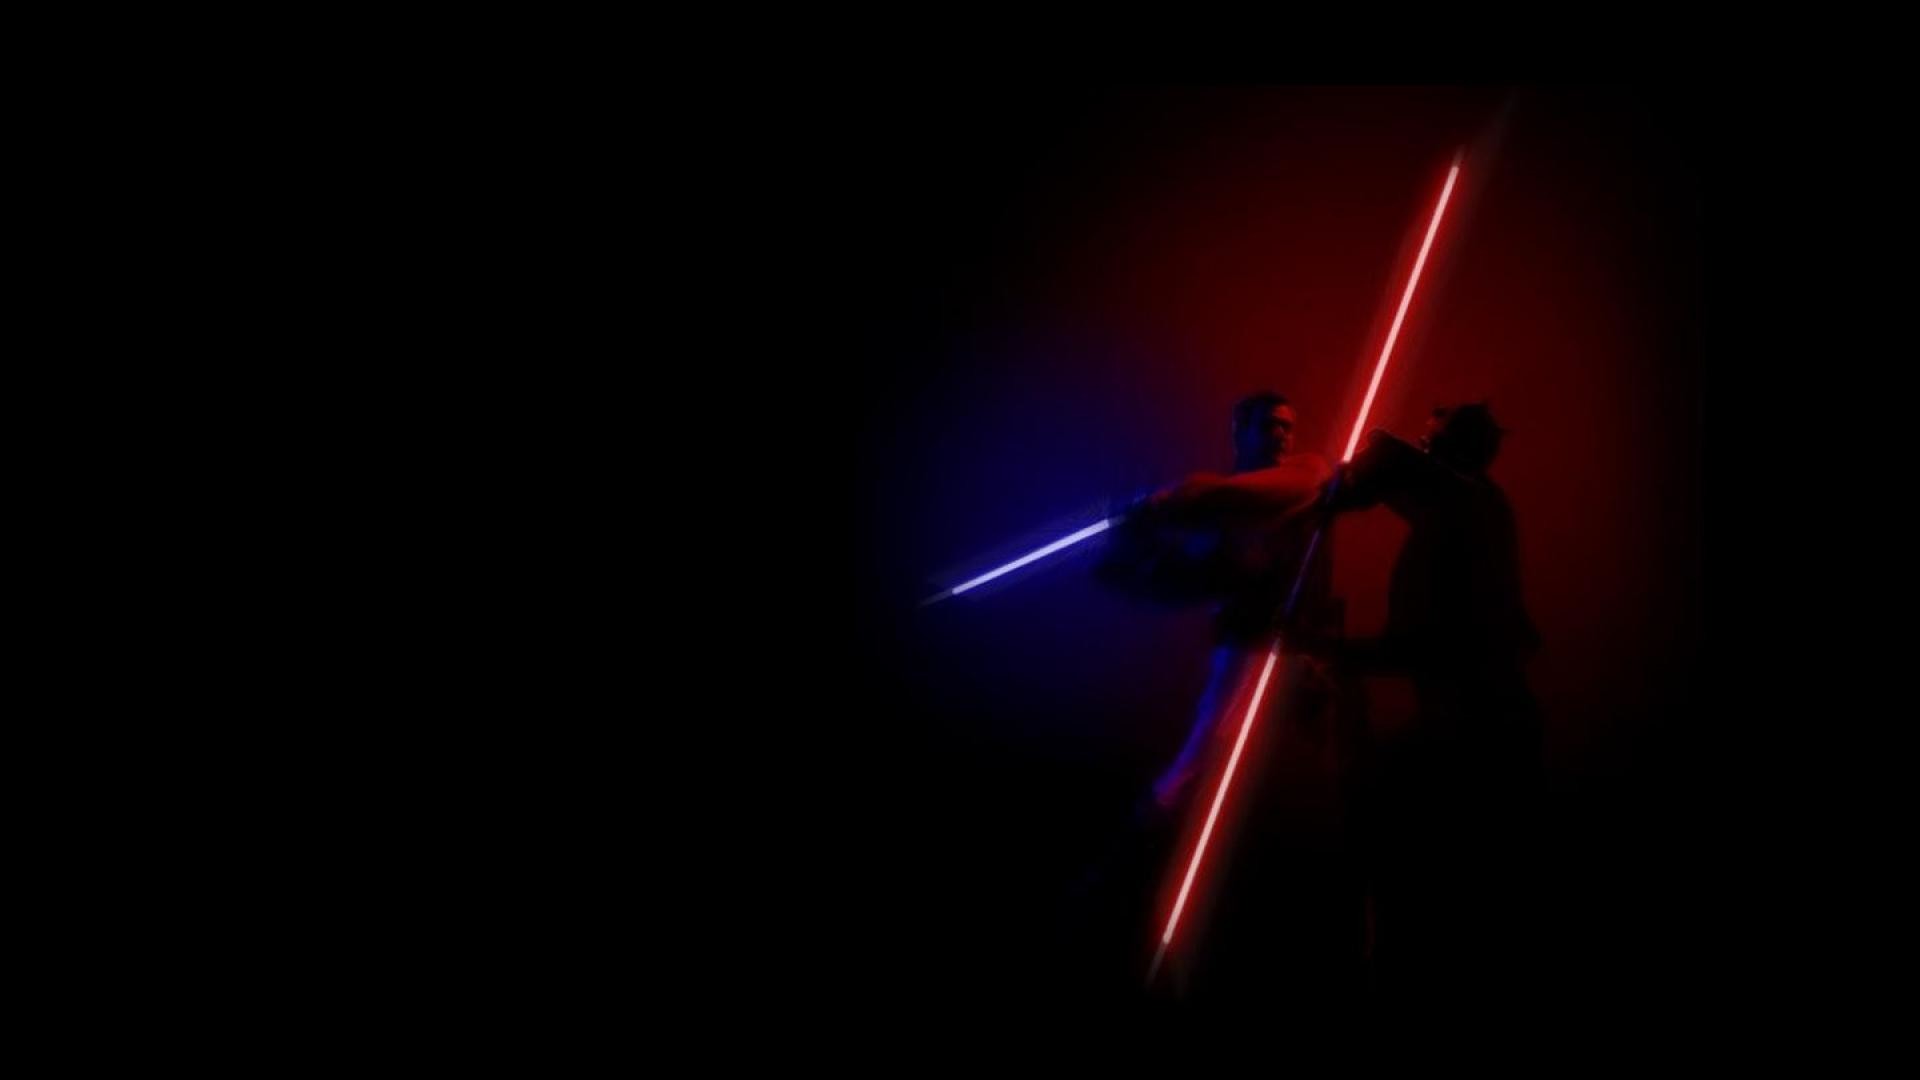 Star wars light saber fight battle hd wallpaper – – HQ Desktop